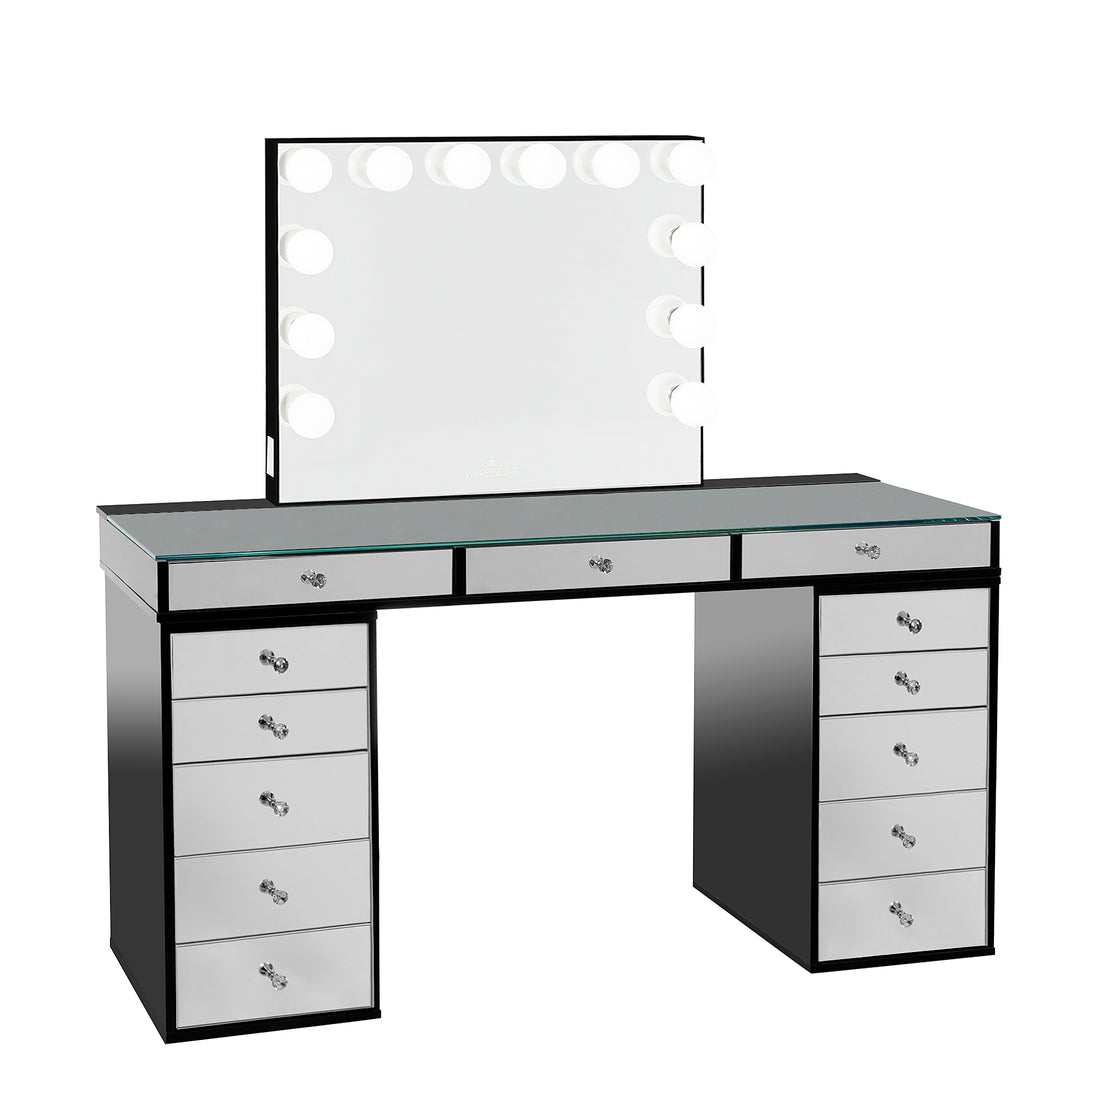 SlayStation® Pro 2.0 Mirrored Tabletop + Vanity Mirror + 5 Drawer Units Bundle